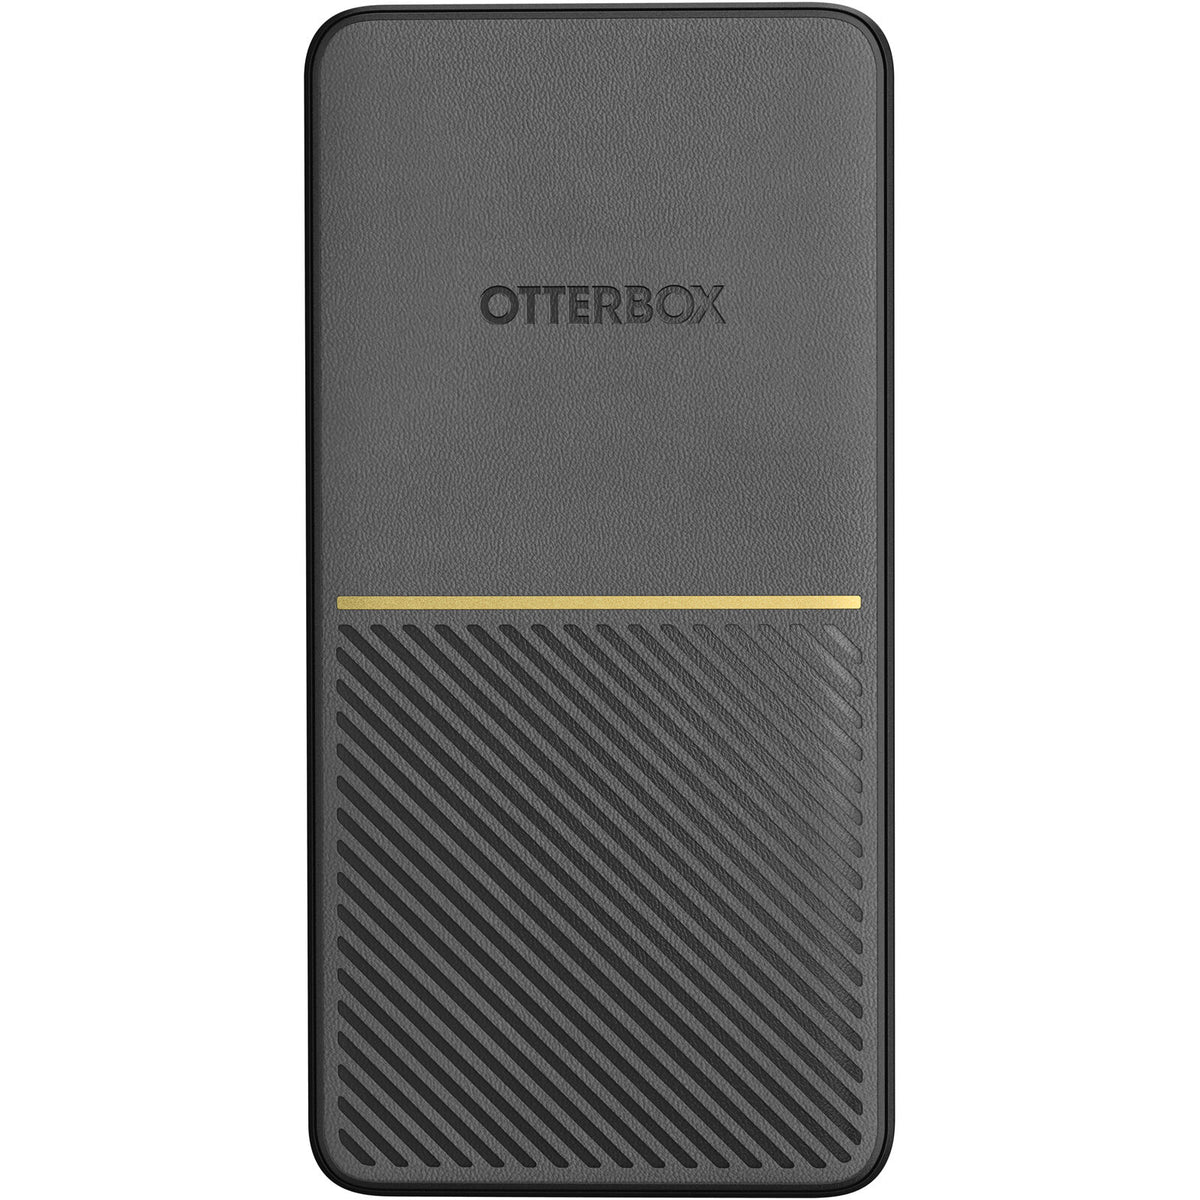 OTTERBOX Power Bank 20K mAh Portable Power, USB-C and USB-A ports, 18 Watts USB-PD - Black